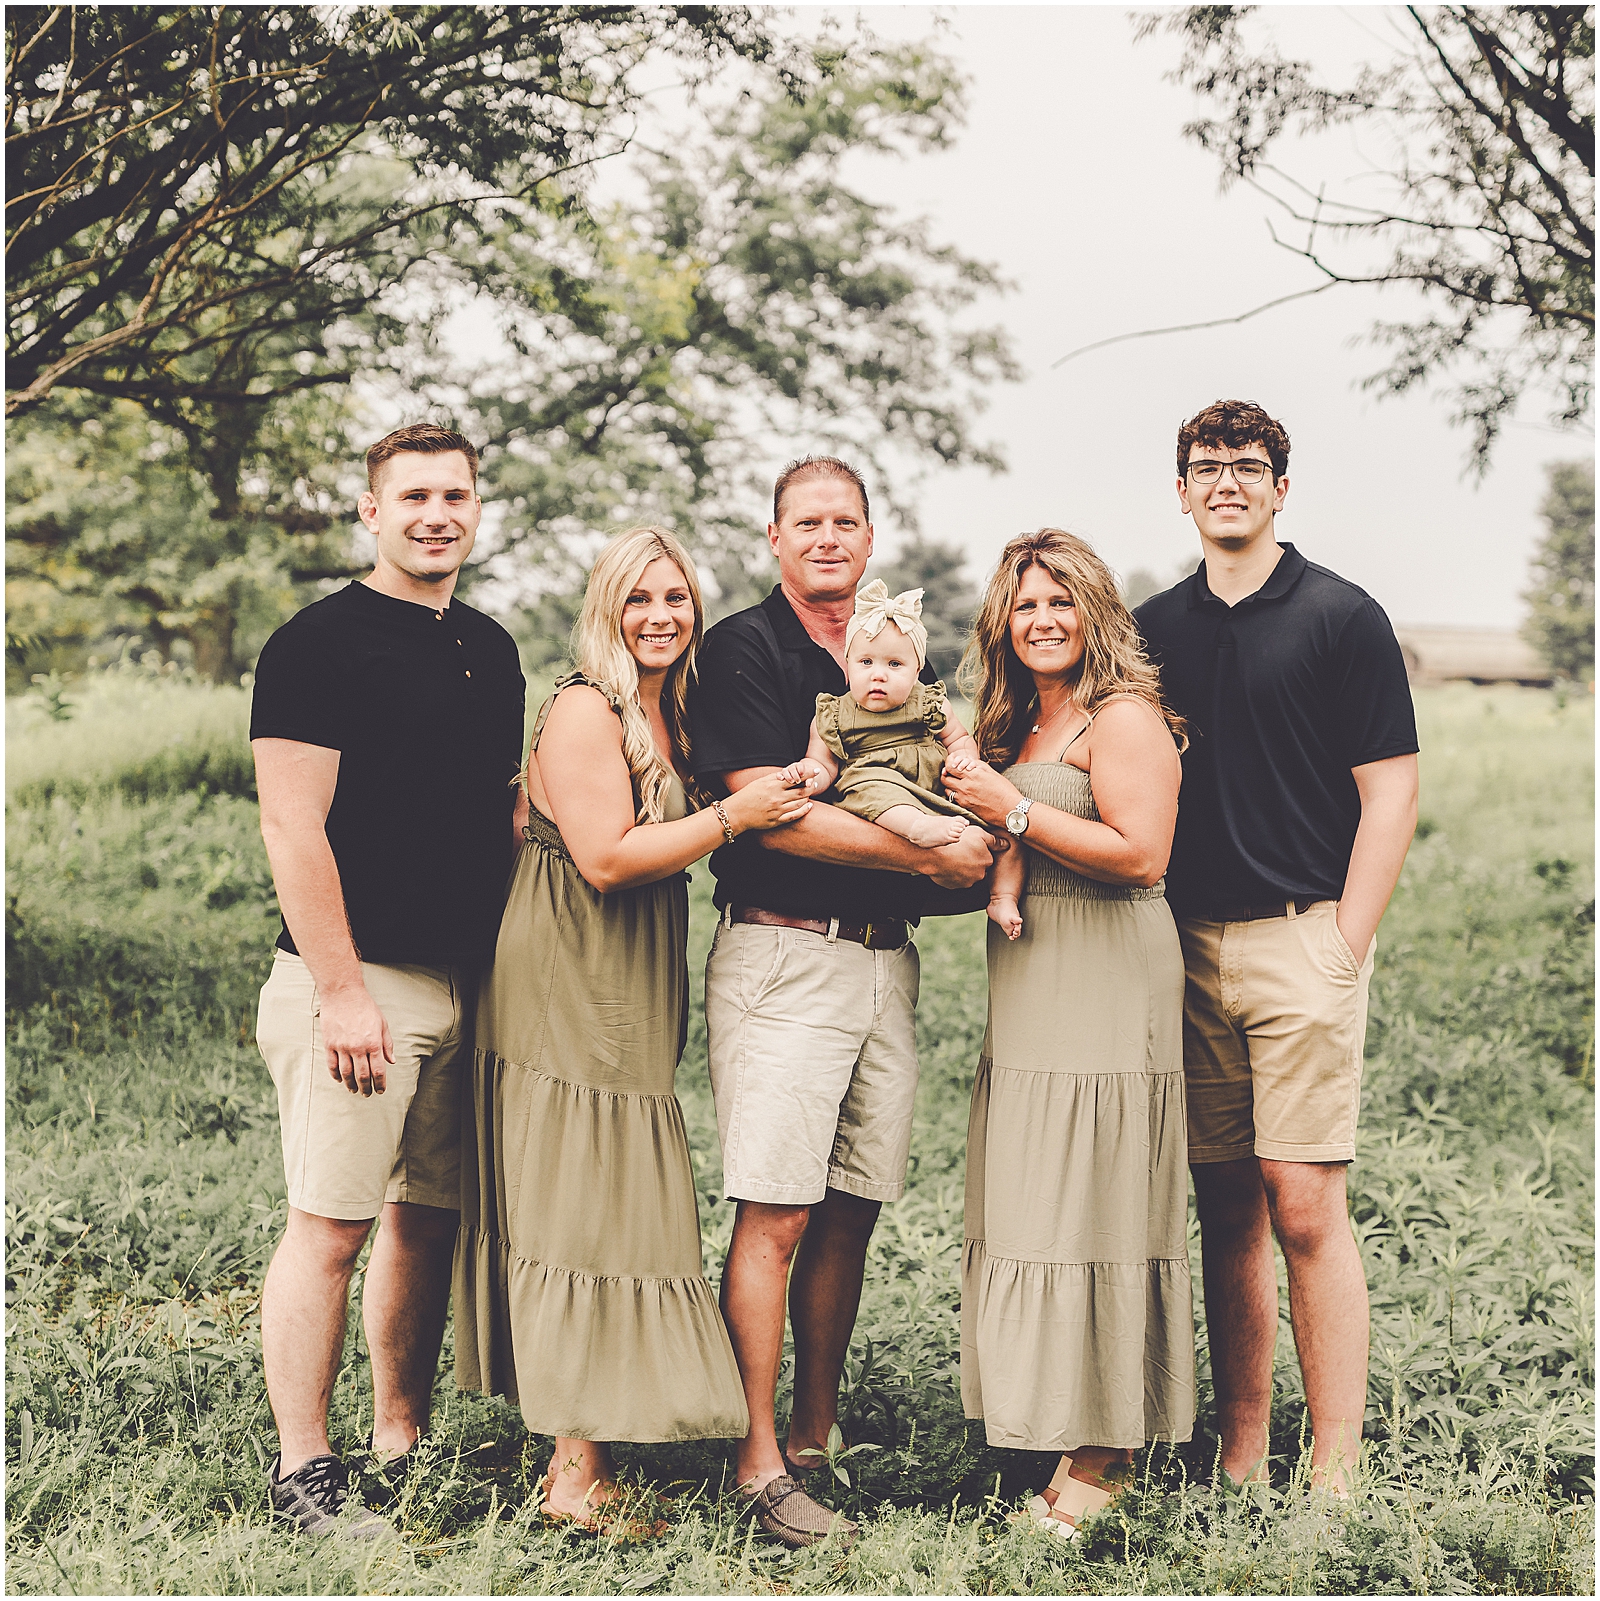 Central Illinois family photos with Bourbonnais & Kankakee County family photographer Kara Evans Photographer.